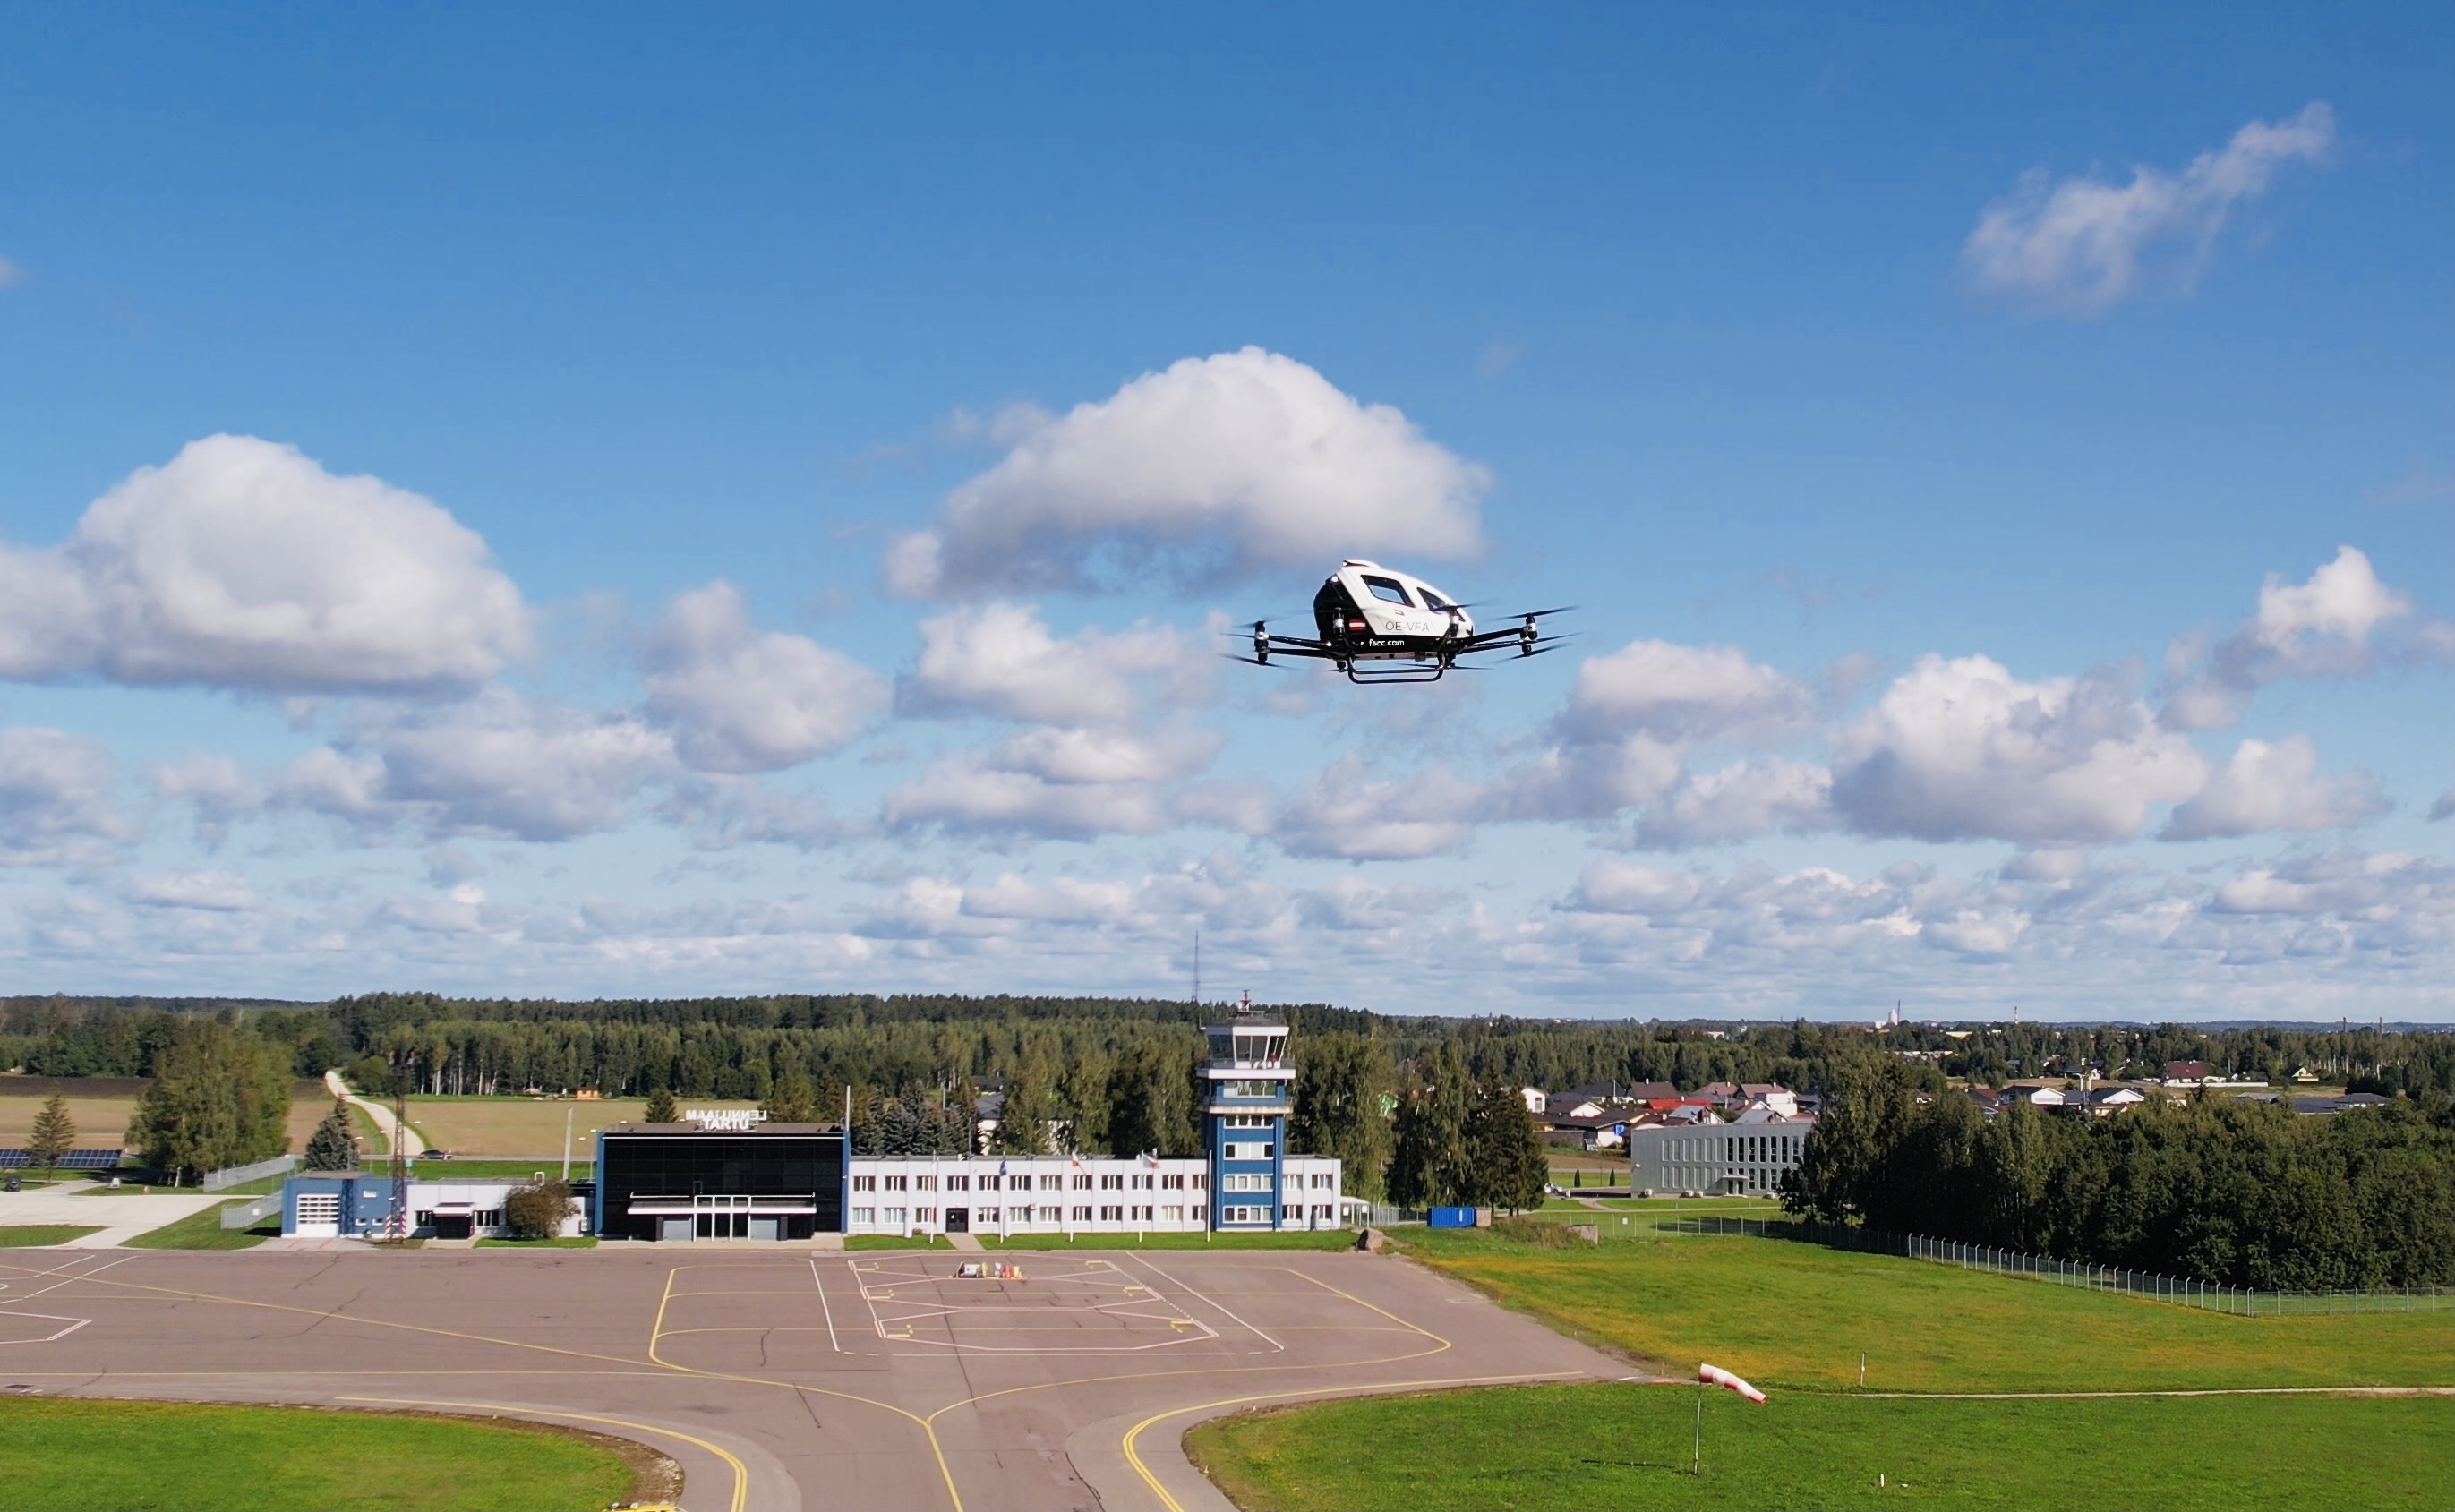 (Picture: The EHang 216 passenger-grade AAV conducting trial flights in Estonia)